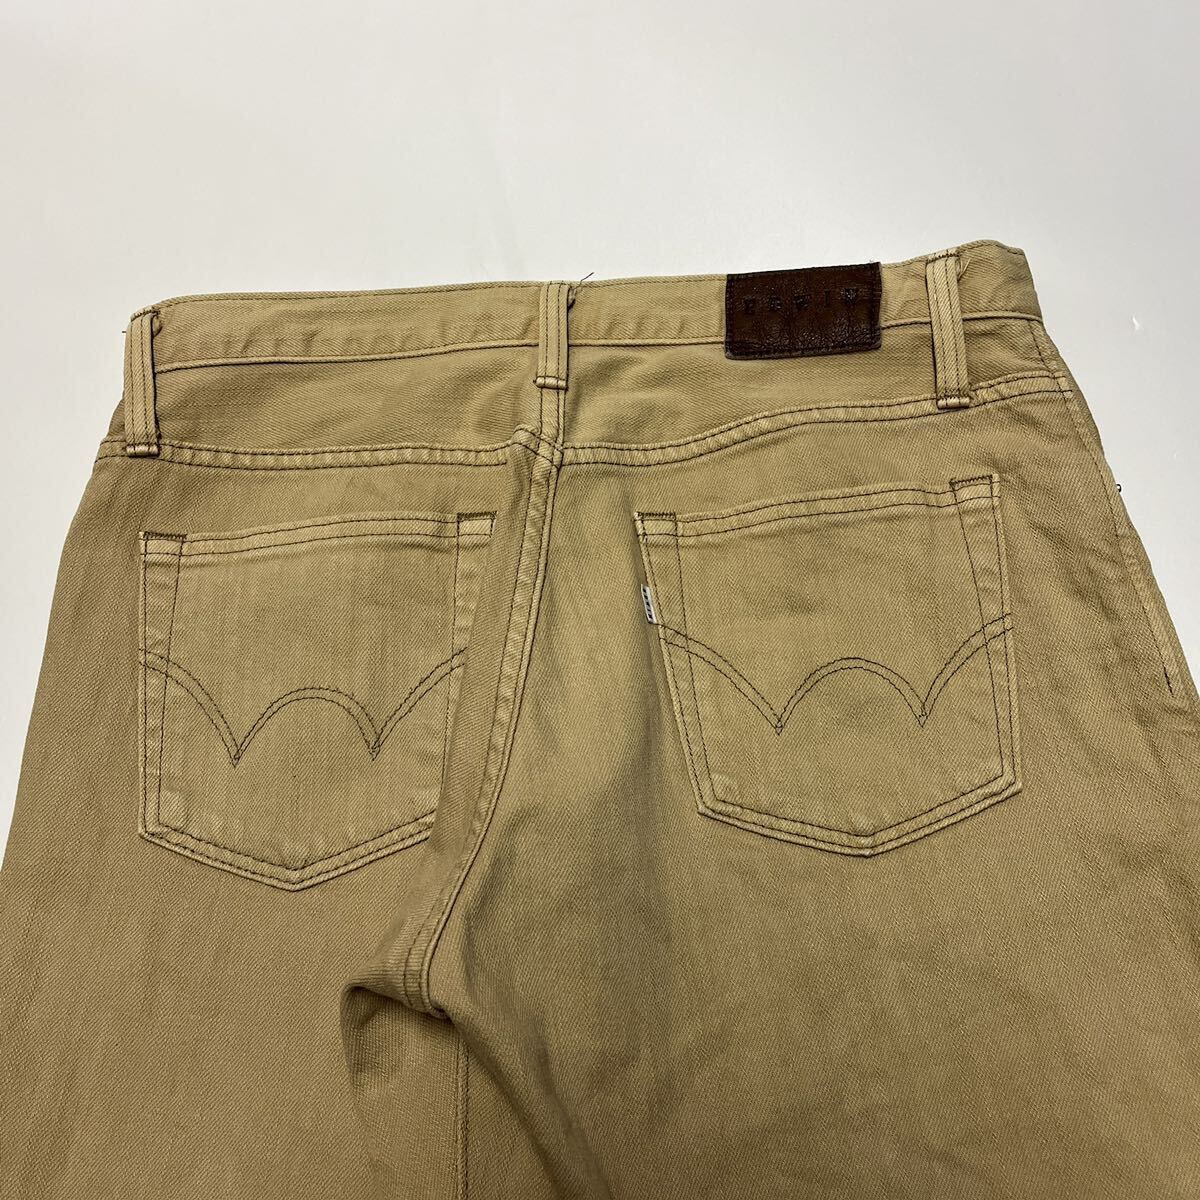 EDWIN Edwin 503ST стрейч джинсы Denim брюки бежевый лен смешивание W30 сделано в Японии 